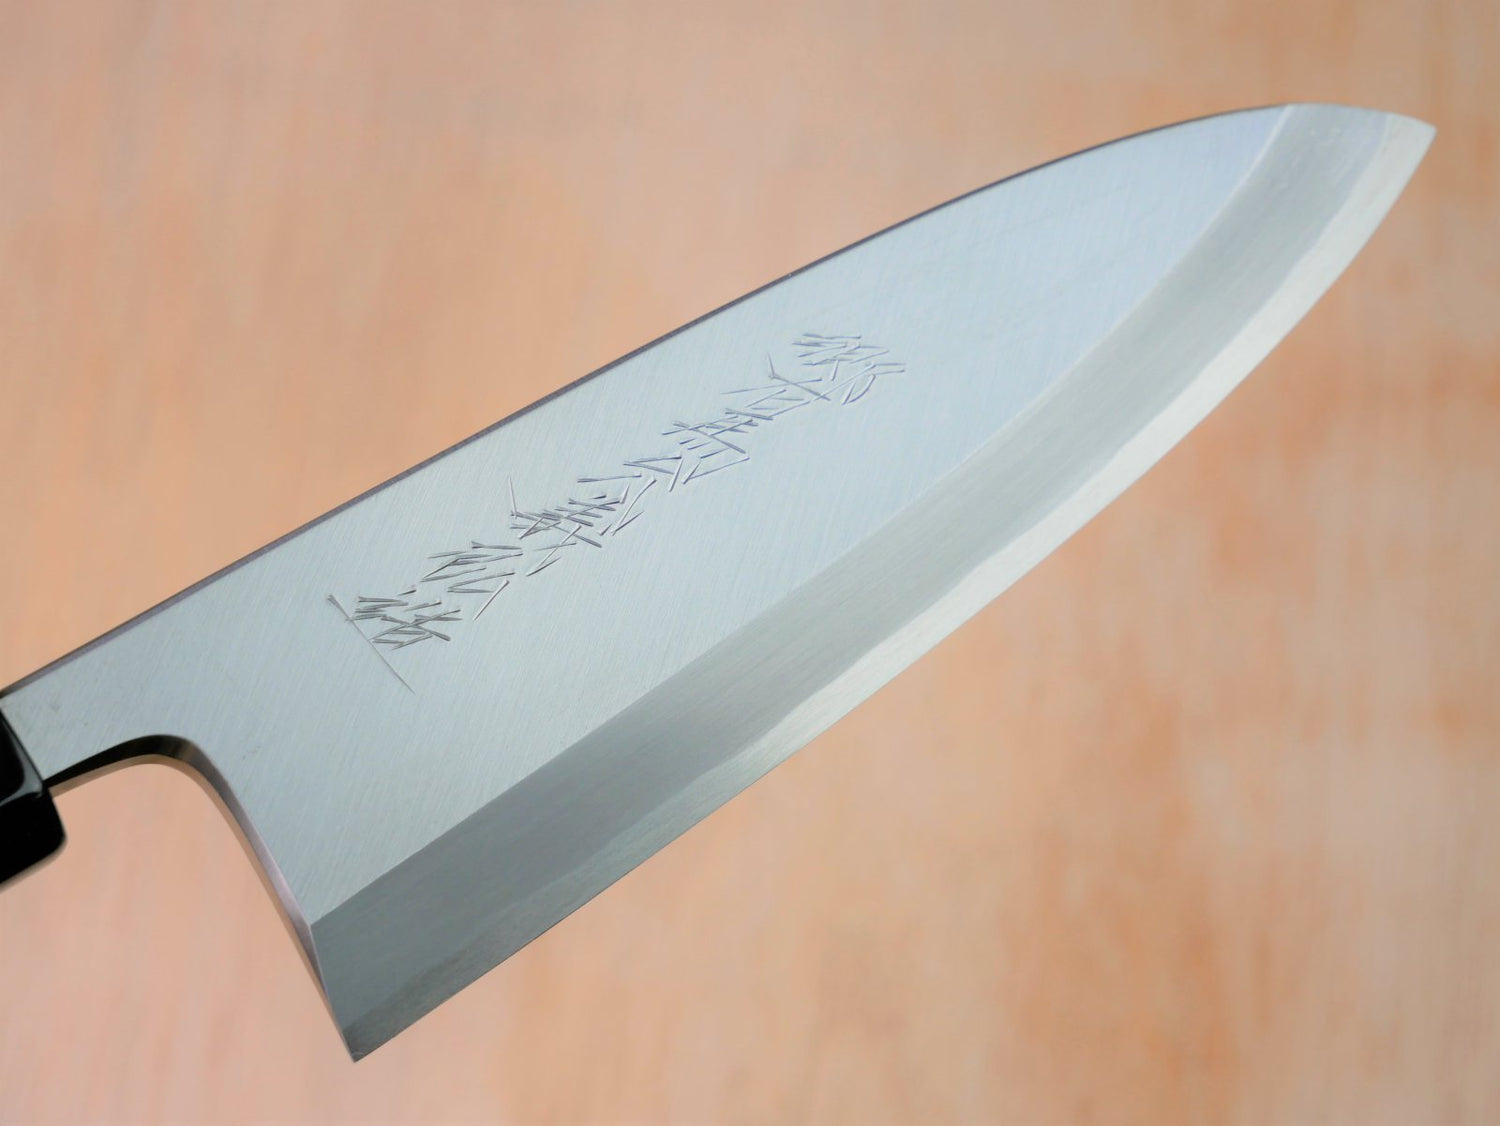 Blade of 180mm Shirogami Deba made by Yamawaki Hamono